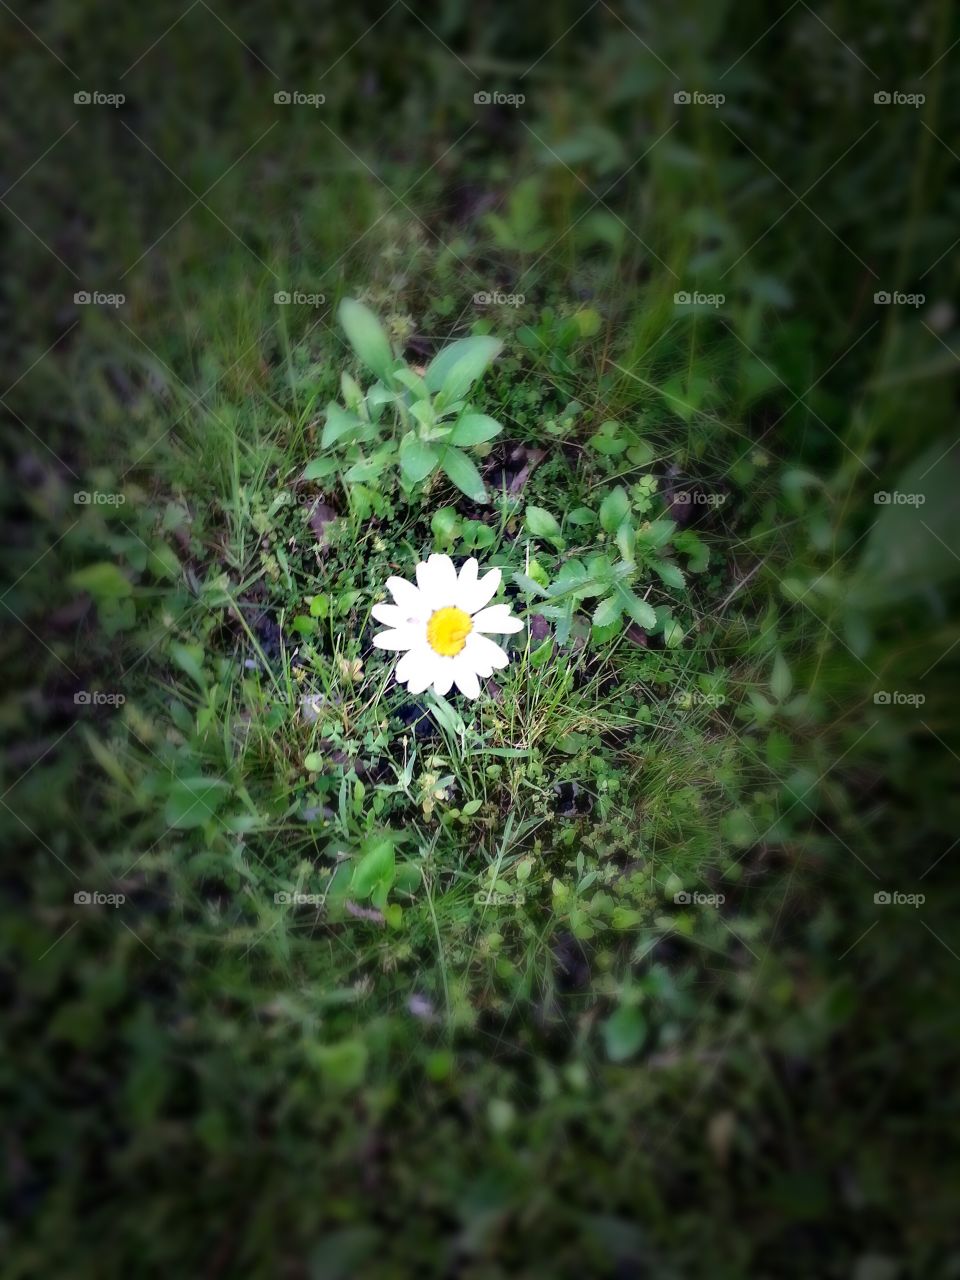 A daisy.